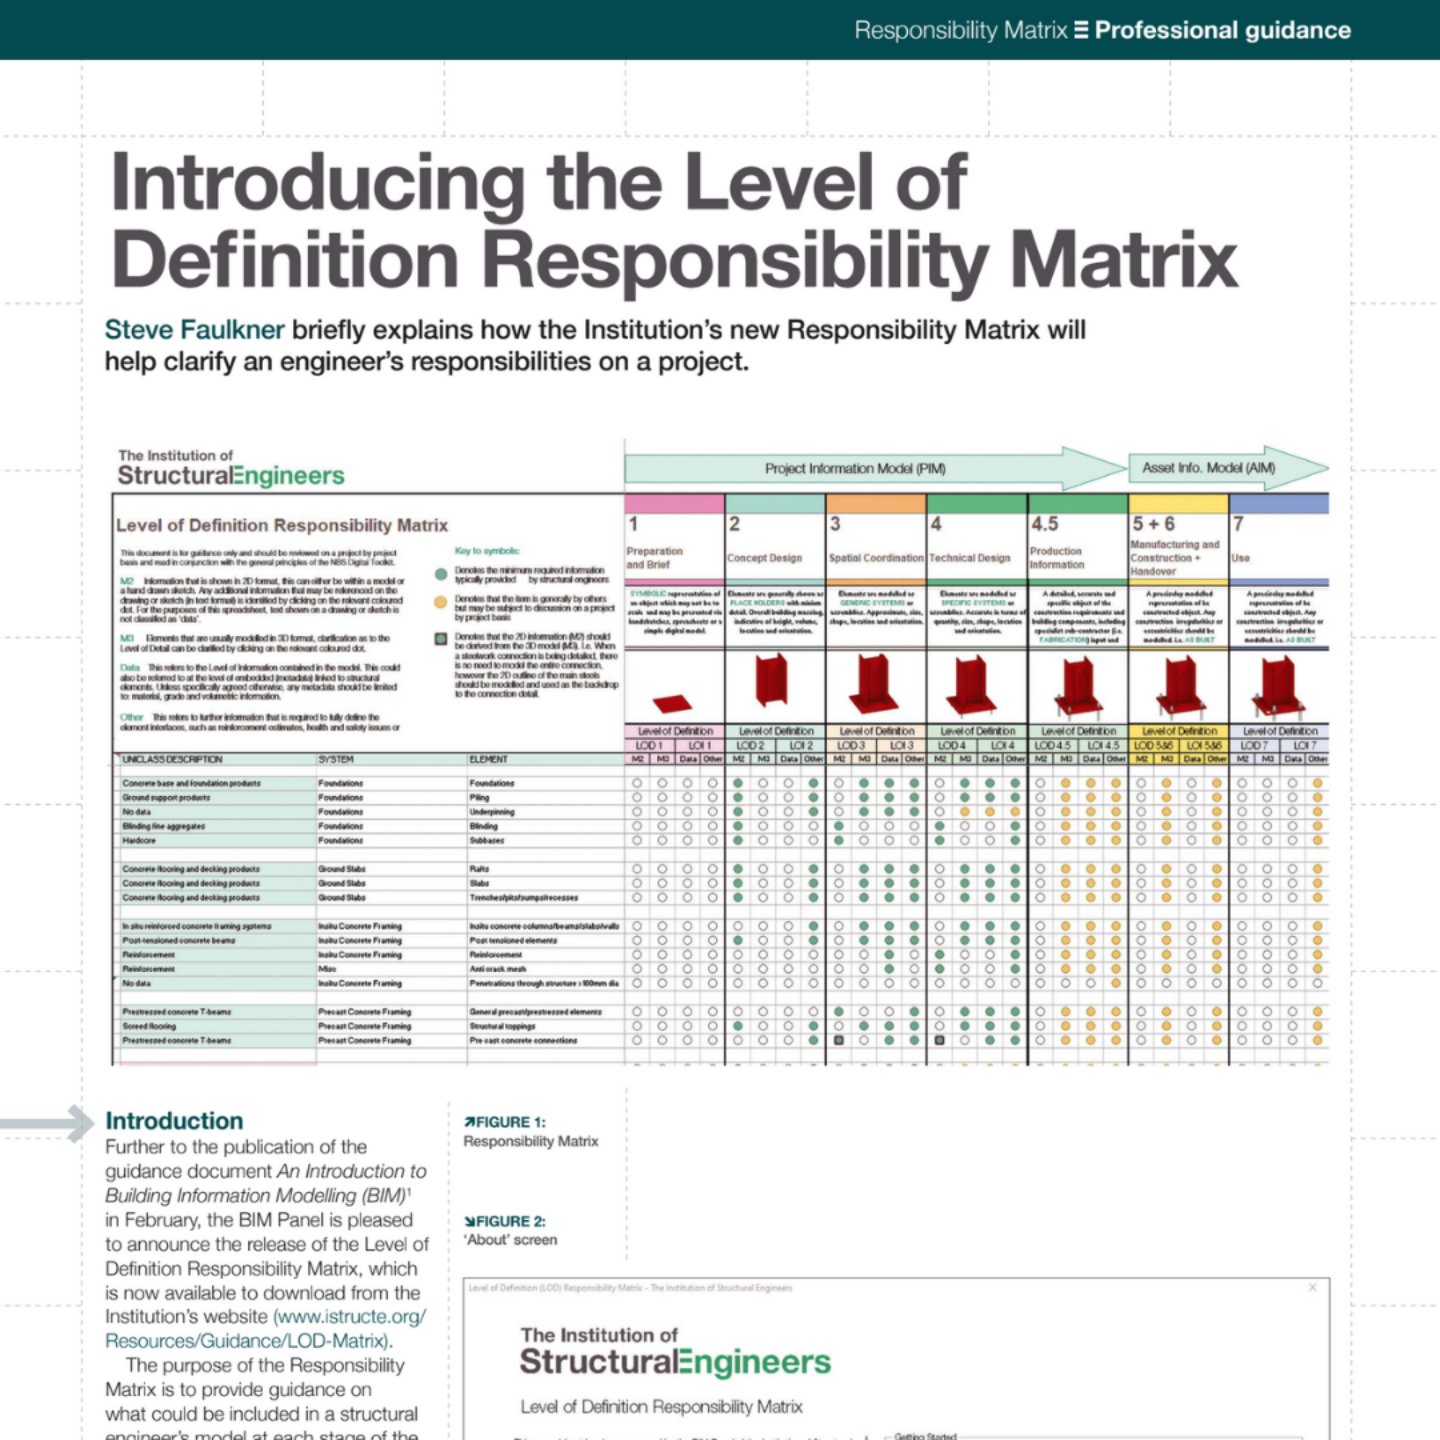 Steve Faulkner on the launch of IStructE's Level of Definition Responsibility Matrix